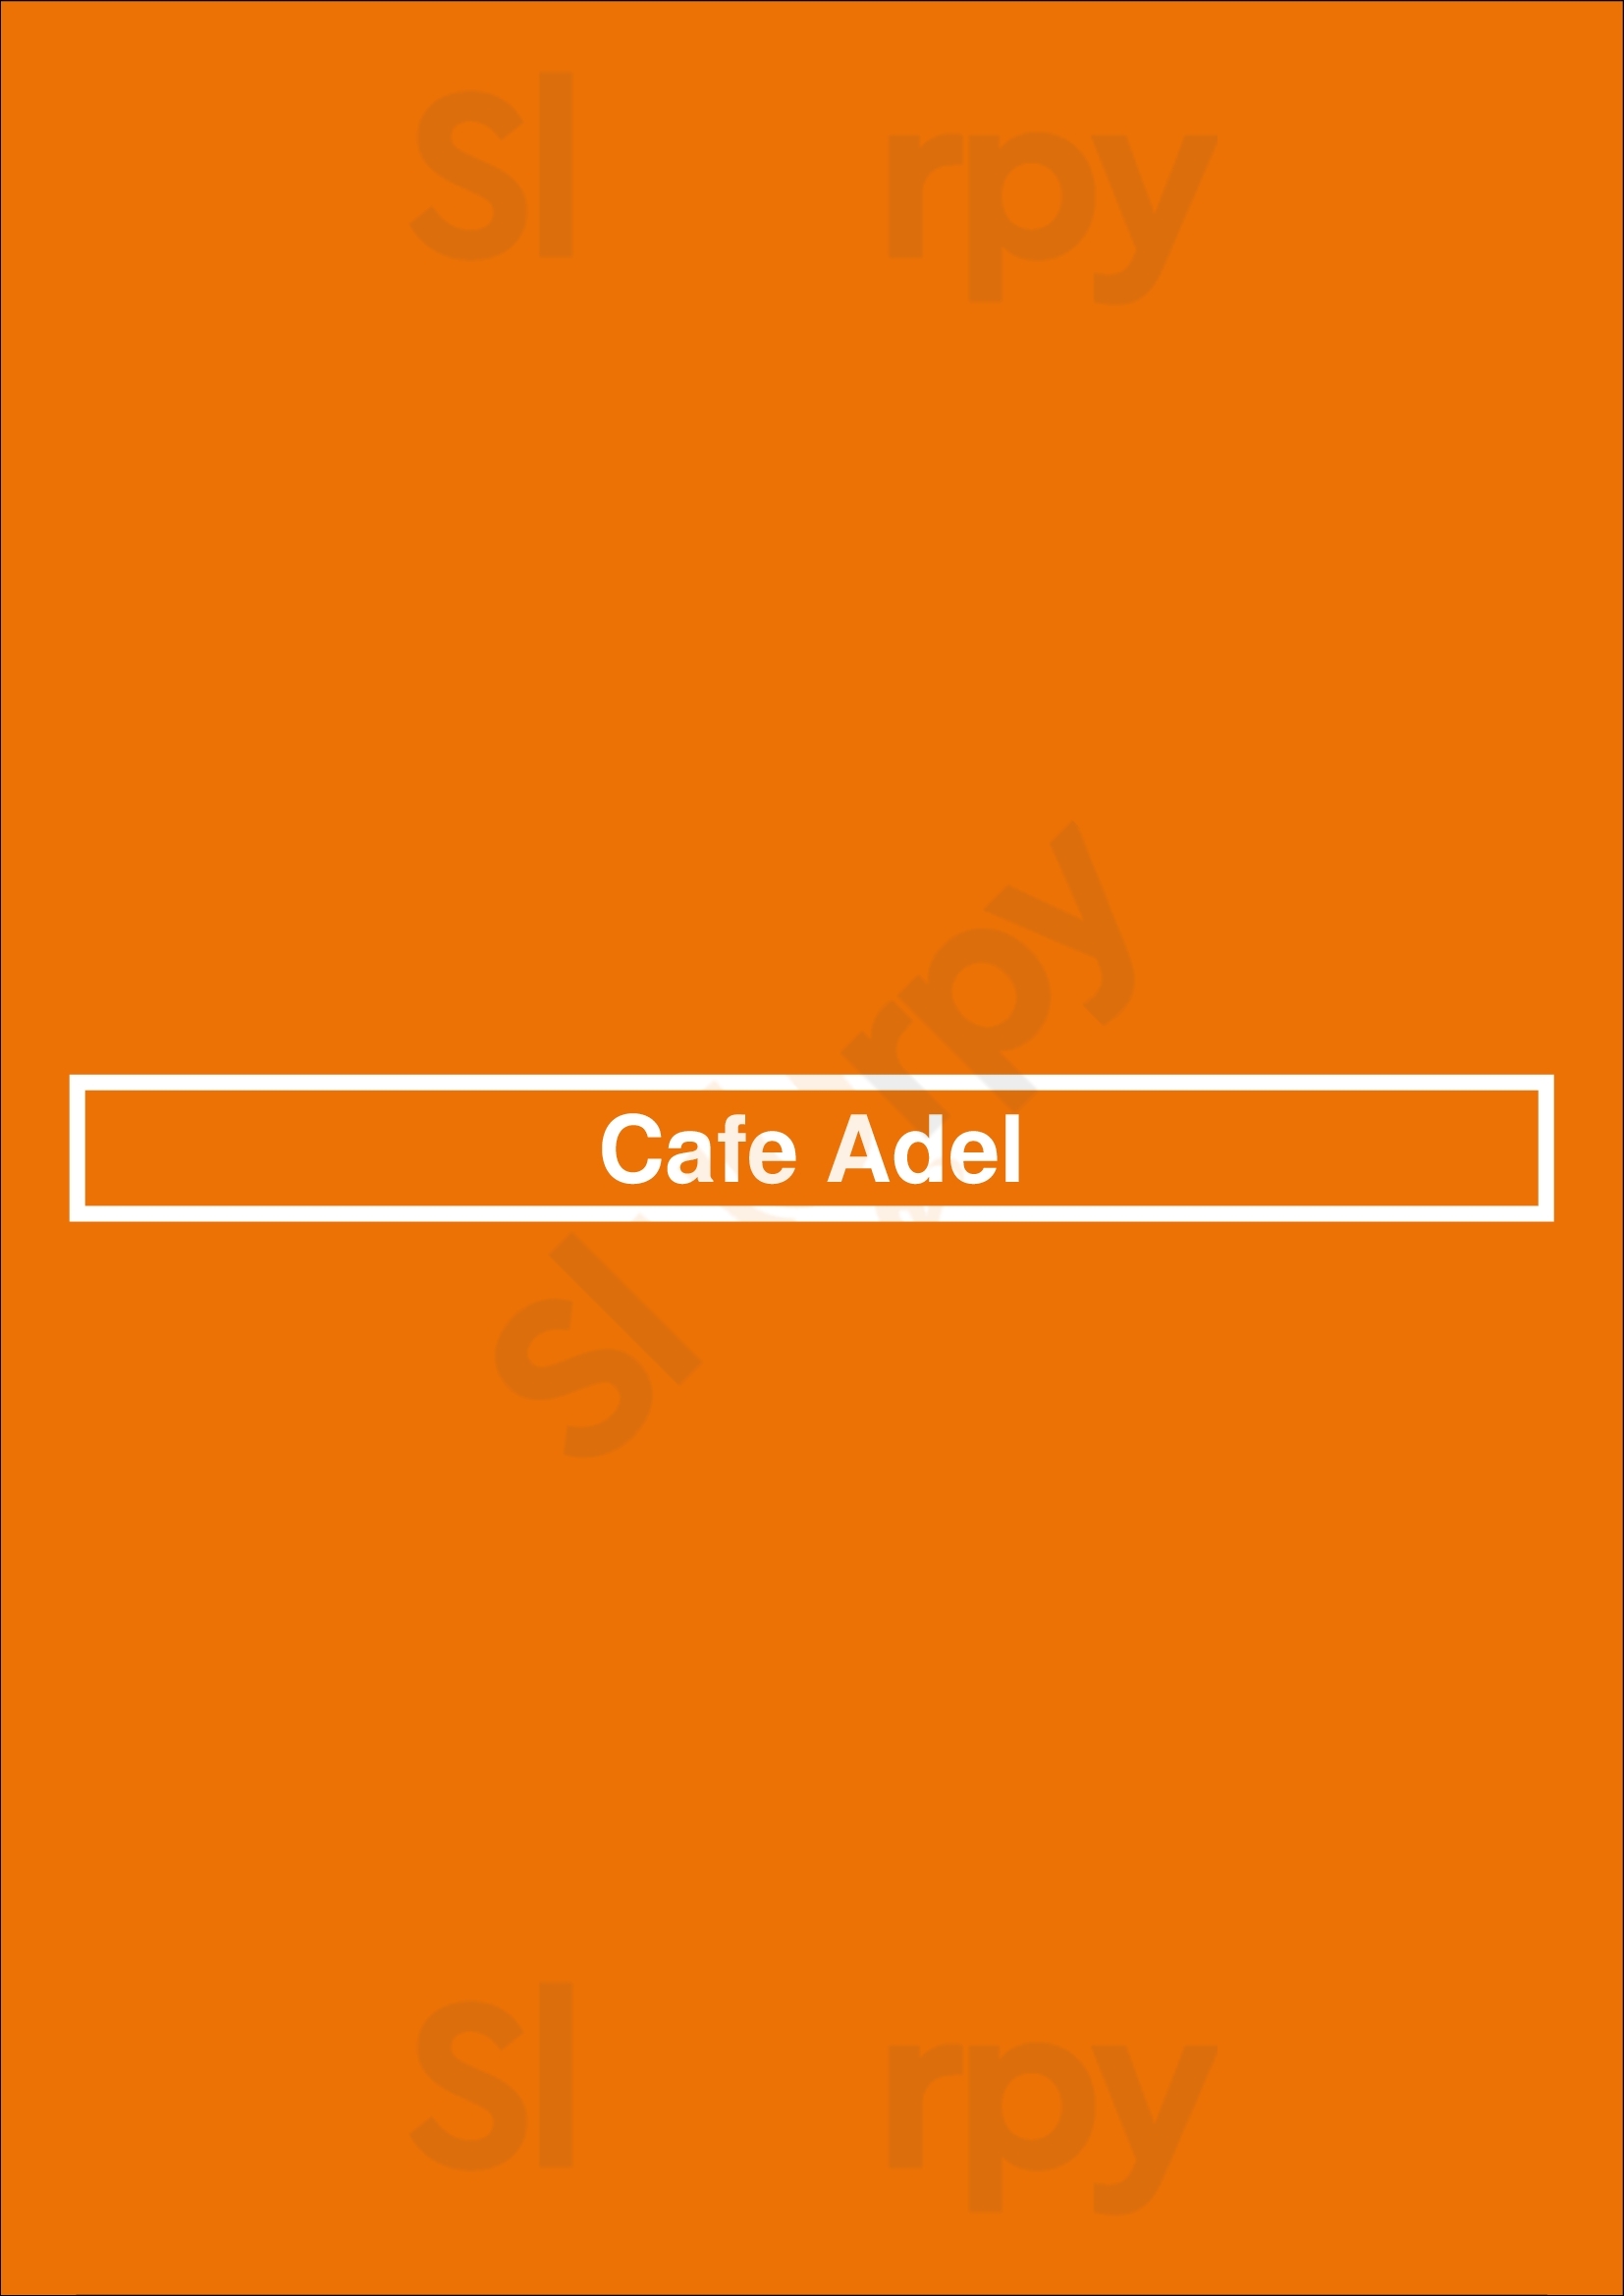 Cafe Adel Houston Menu - 1